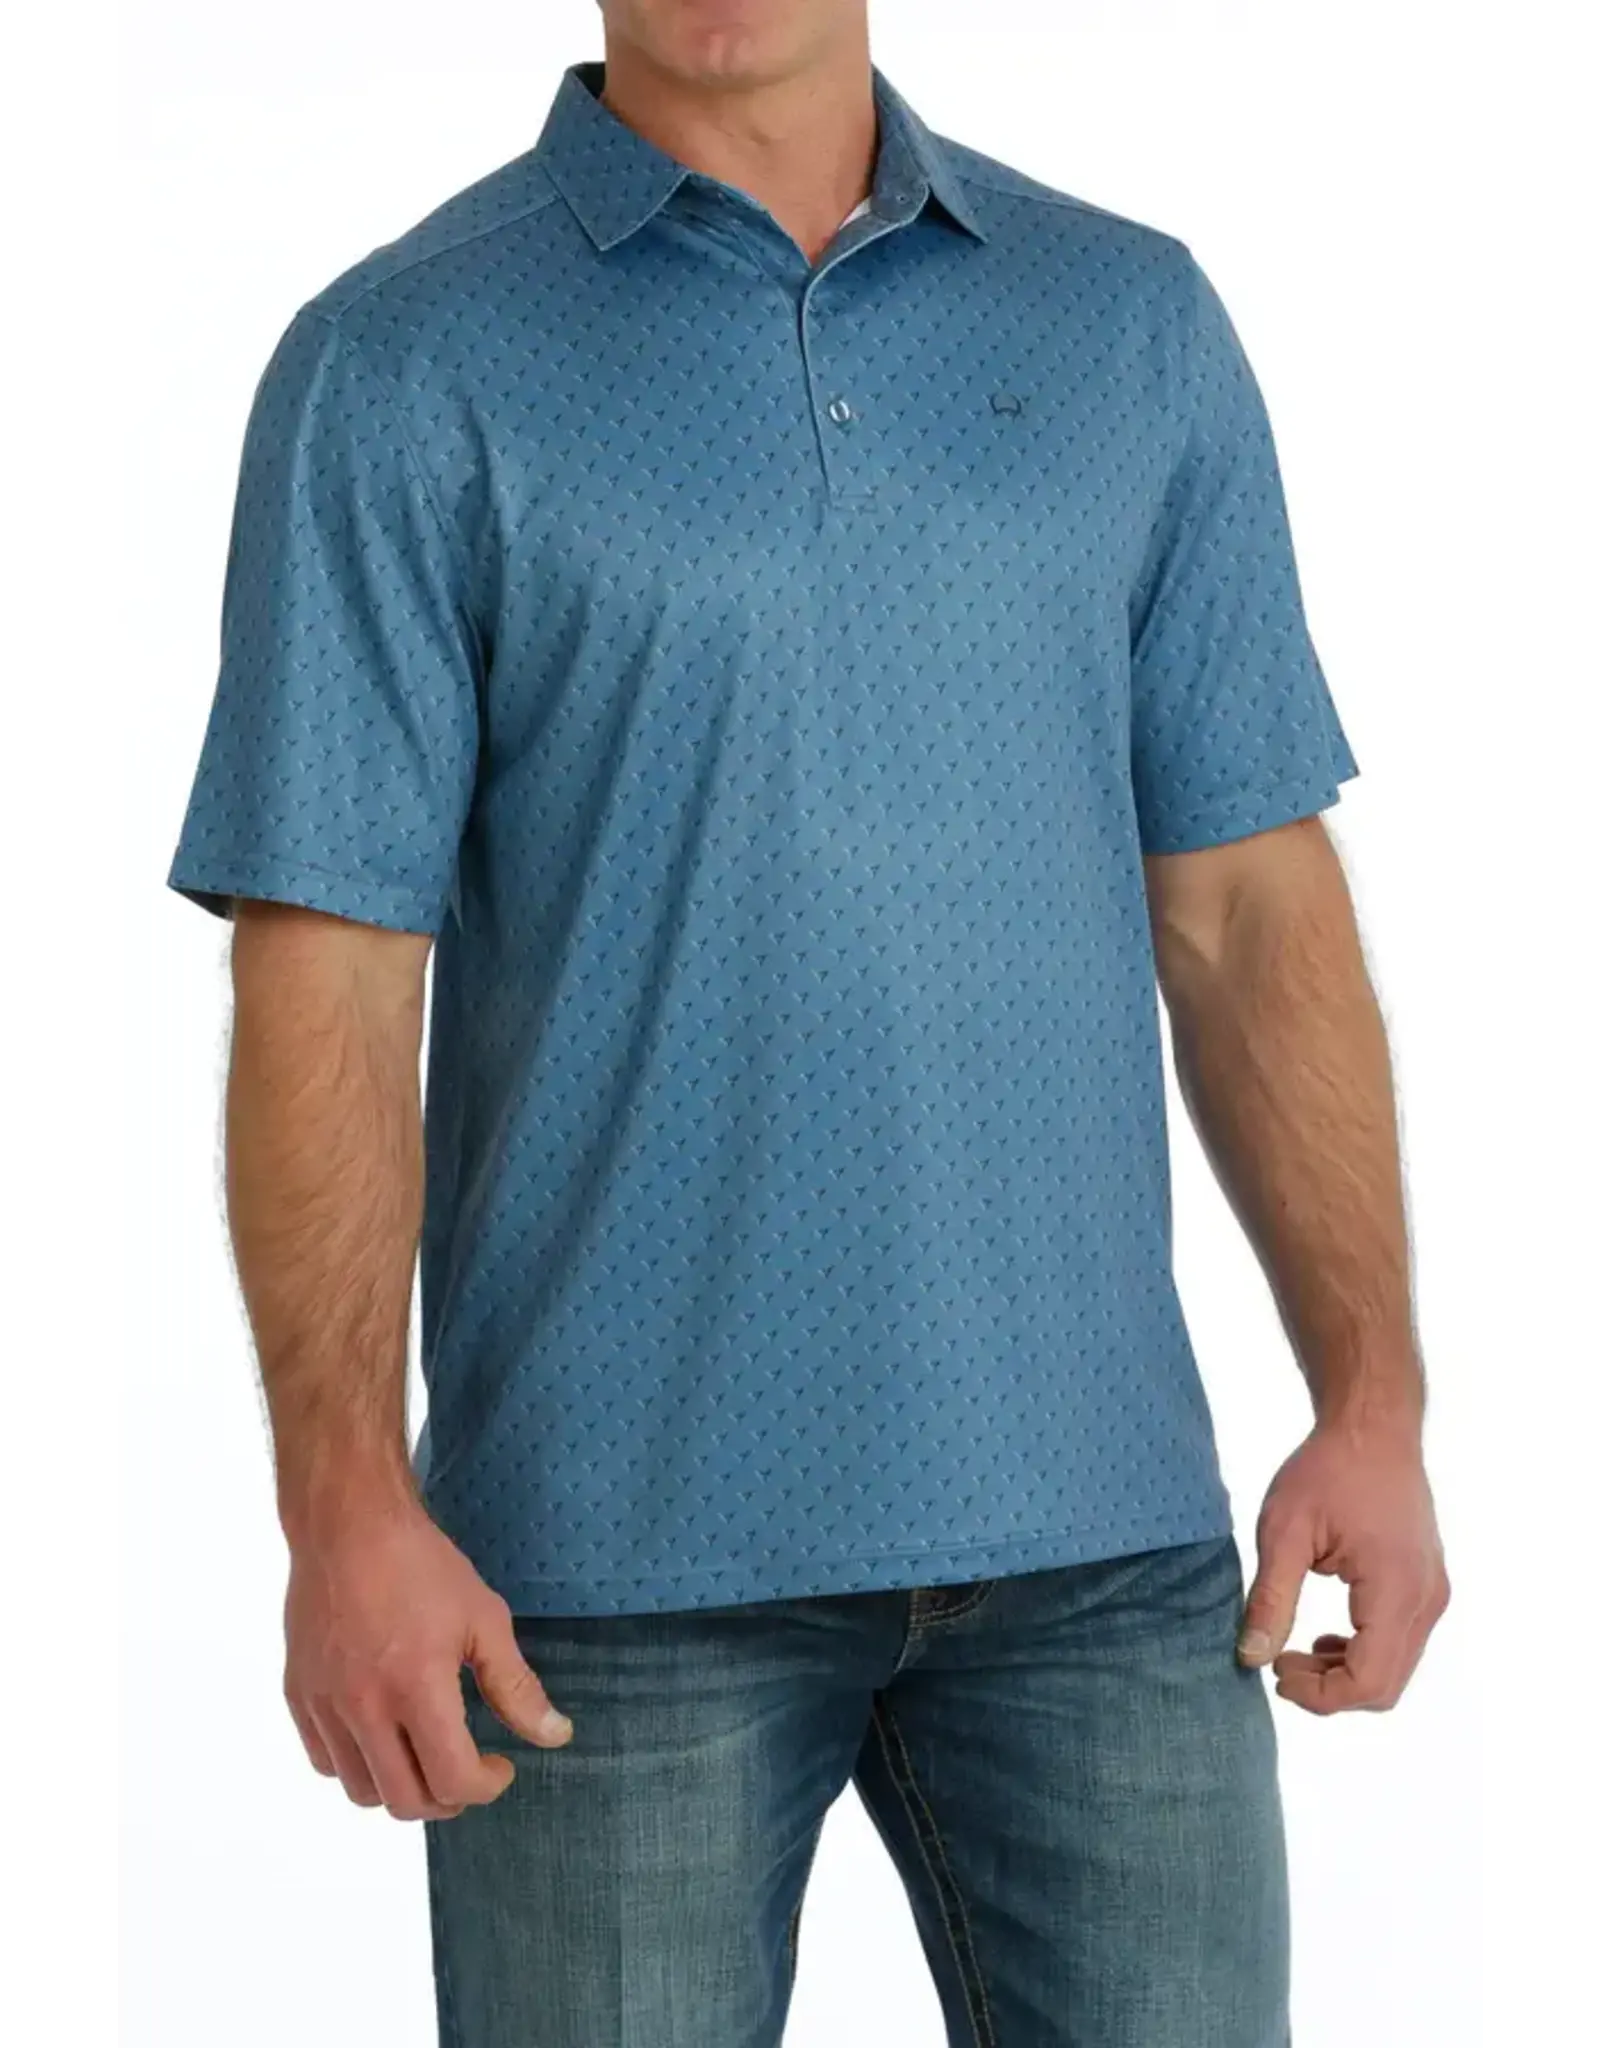 Cinch Men's Teal/Lime Steerhead Arenaflex MTW1863034 Polo Shirt